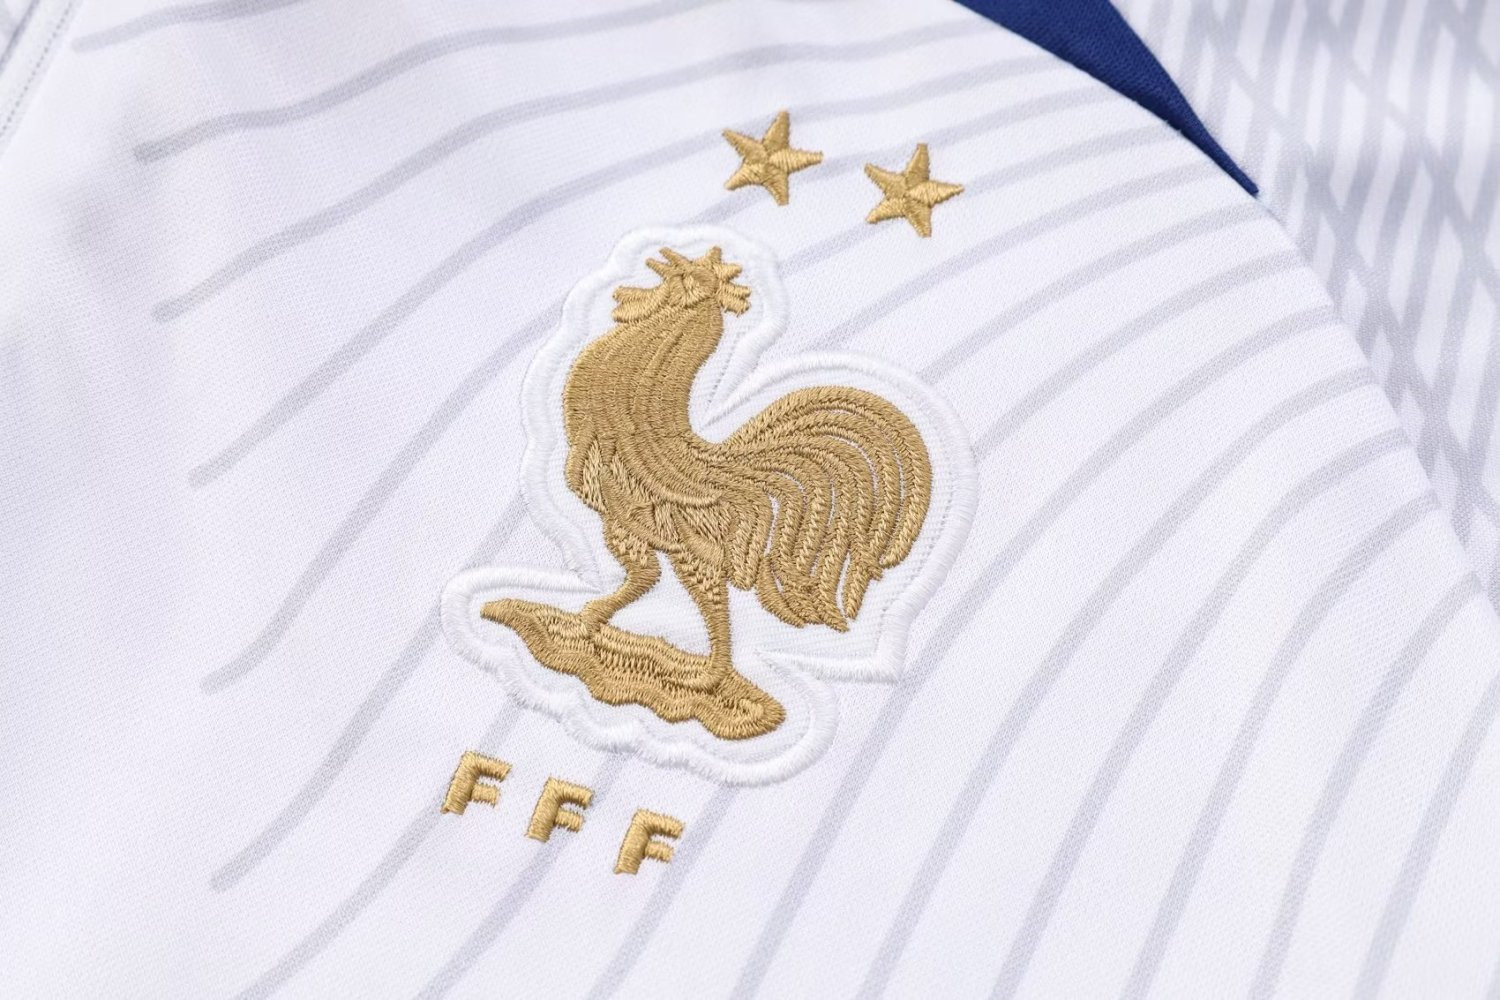 France Soccer Training Suit Replica White - Blue 2022 Mens